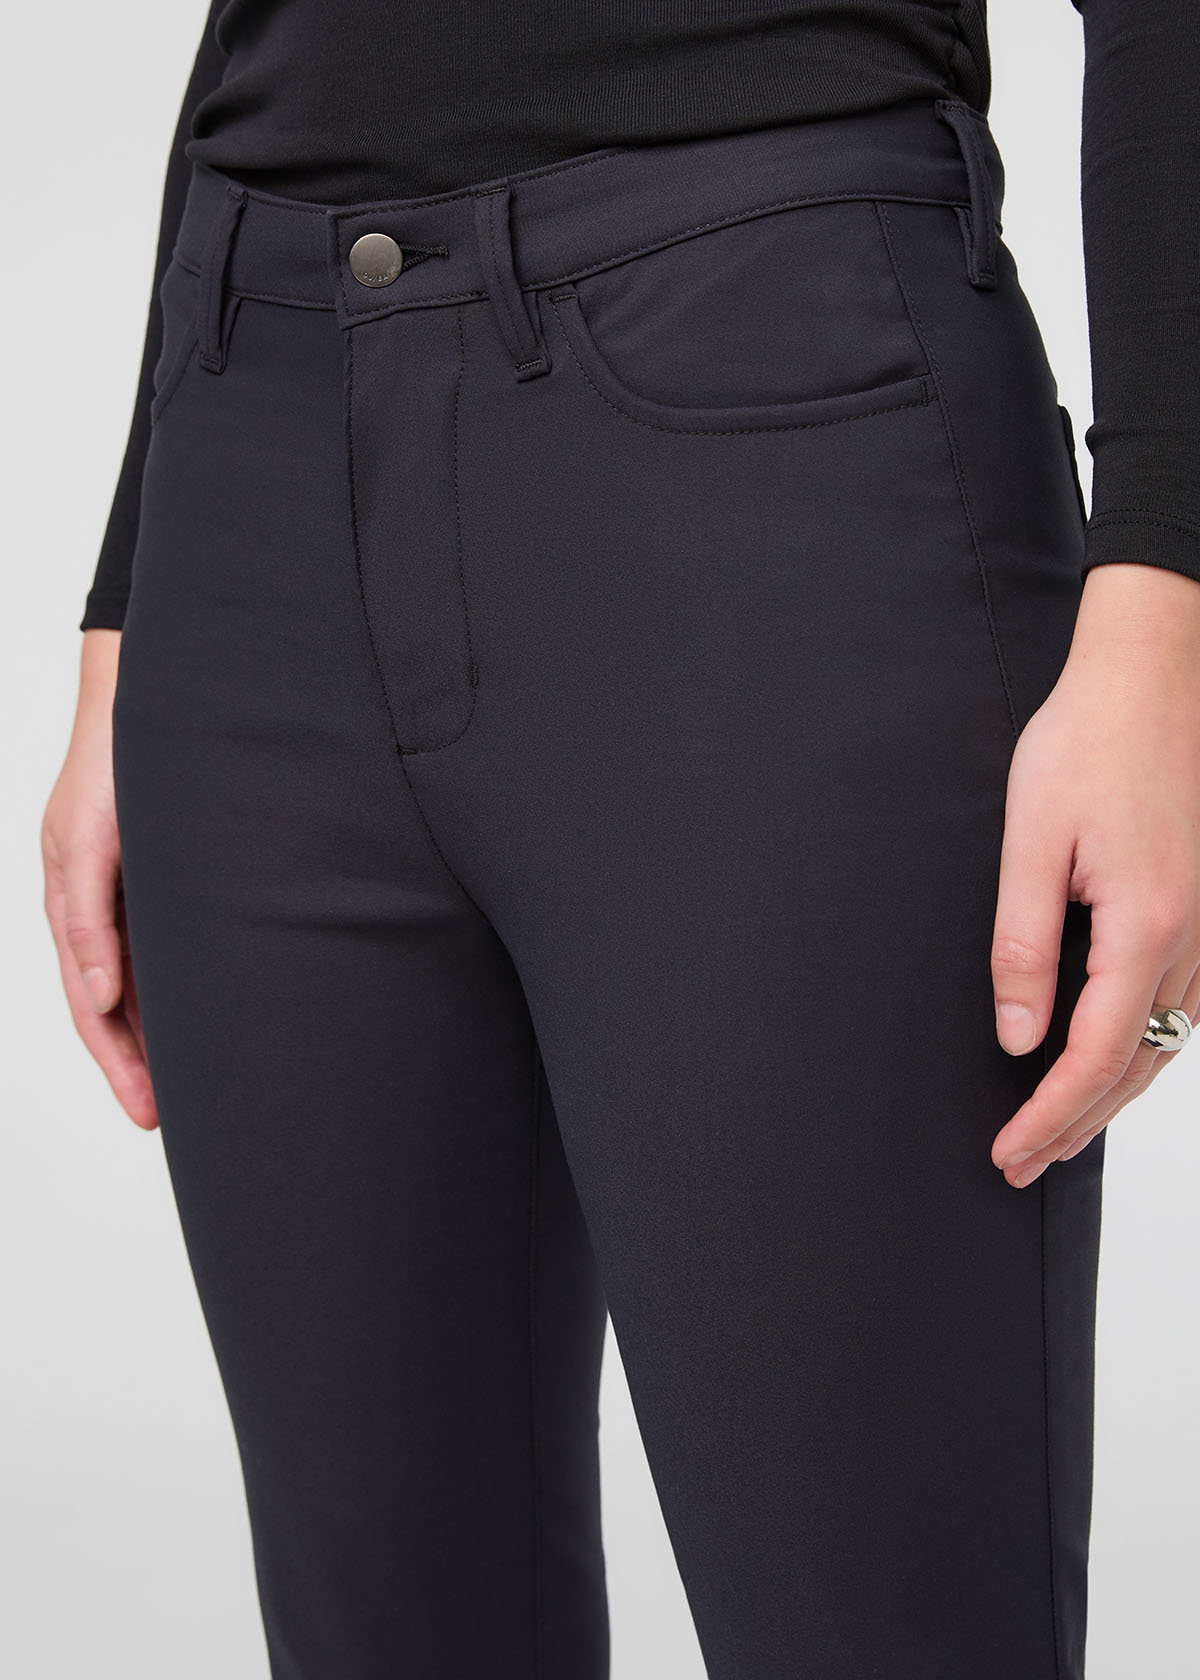 womens black crop kick flare pant front waistband detail